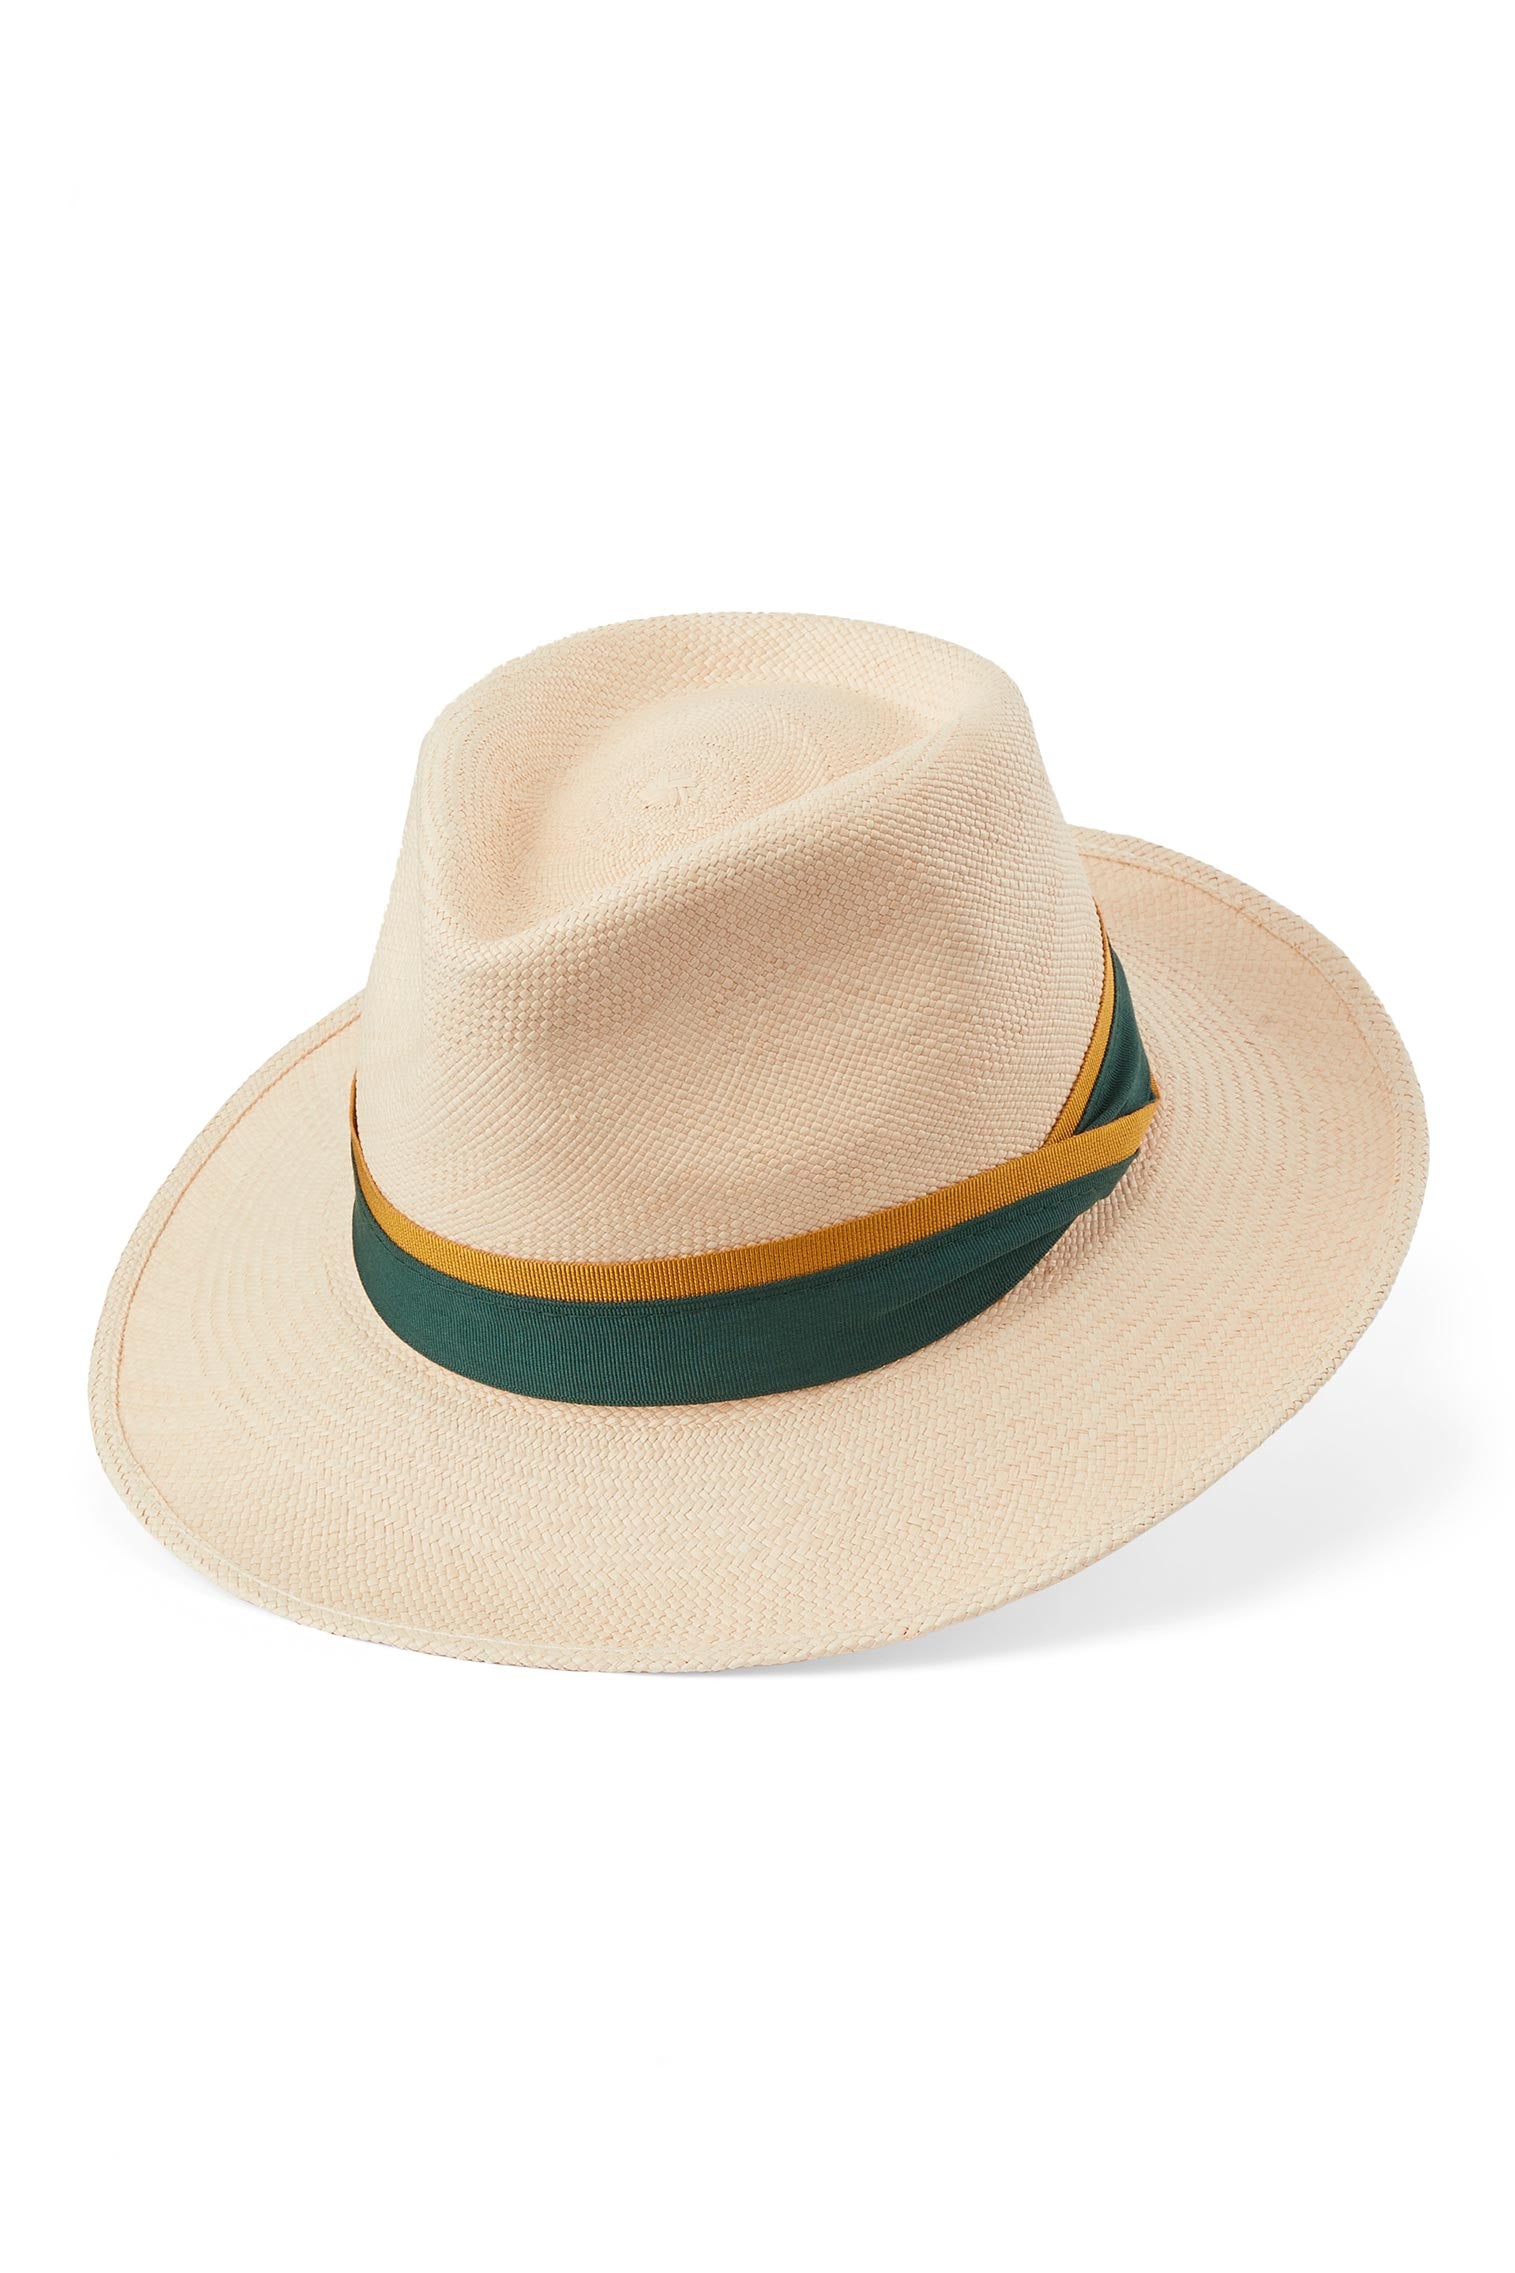 Highgrove Panama - Panamas & Sun Hats for Women - Lock & Co. Hatters London UK